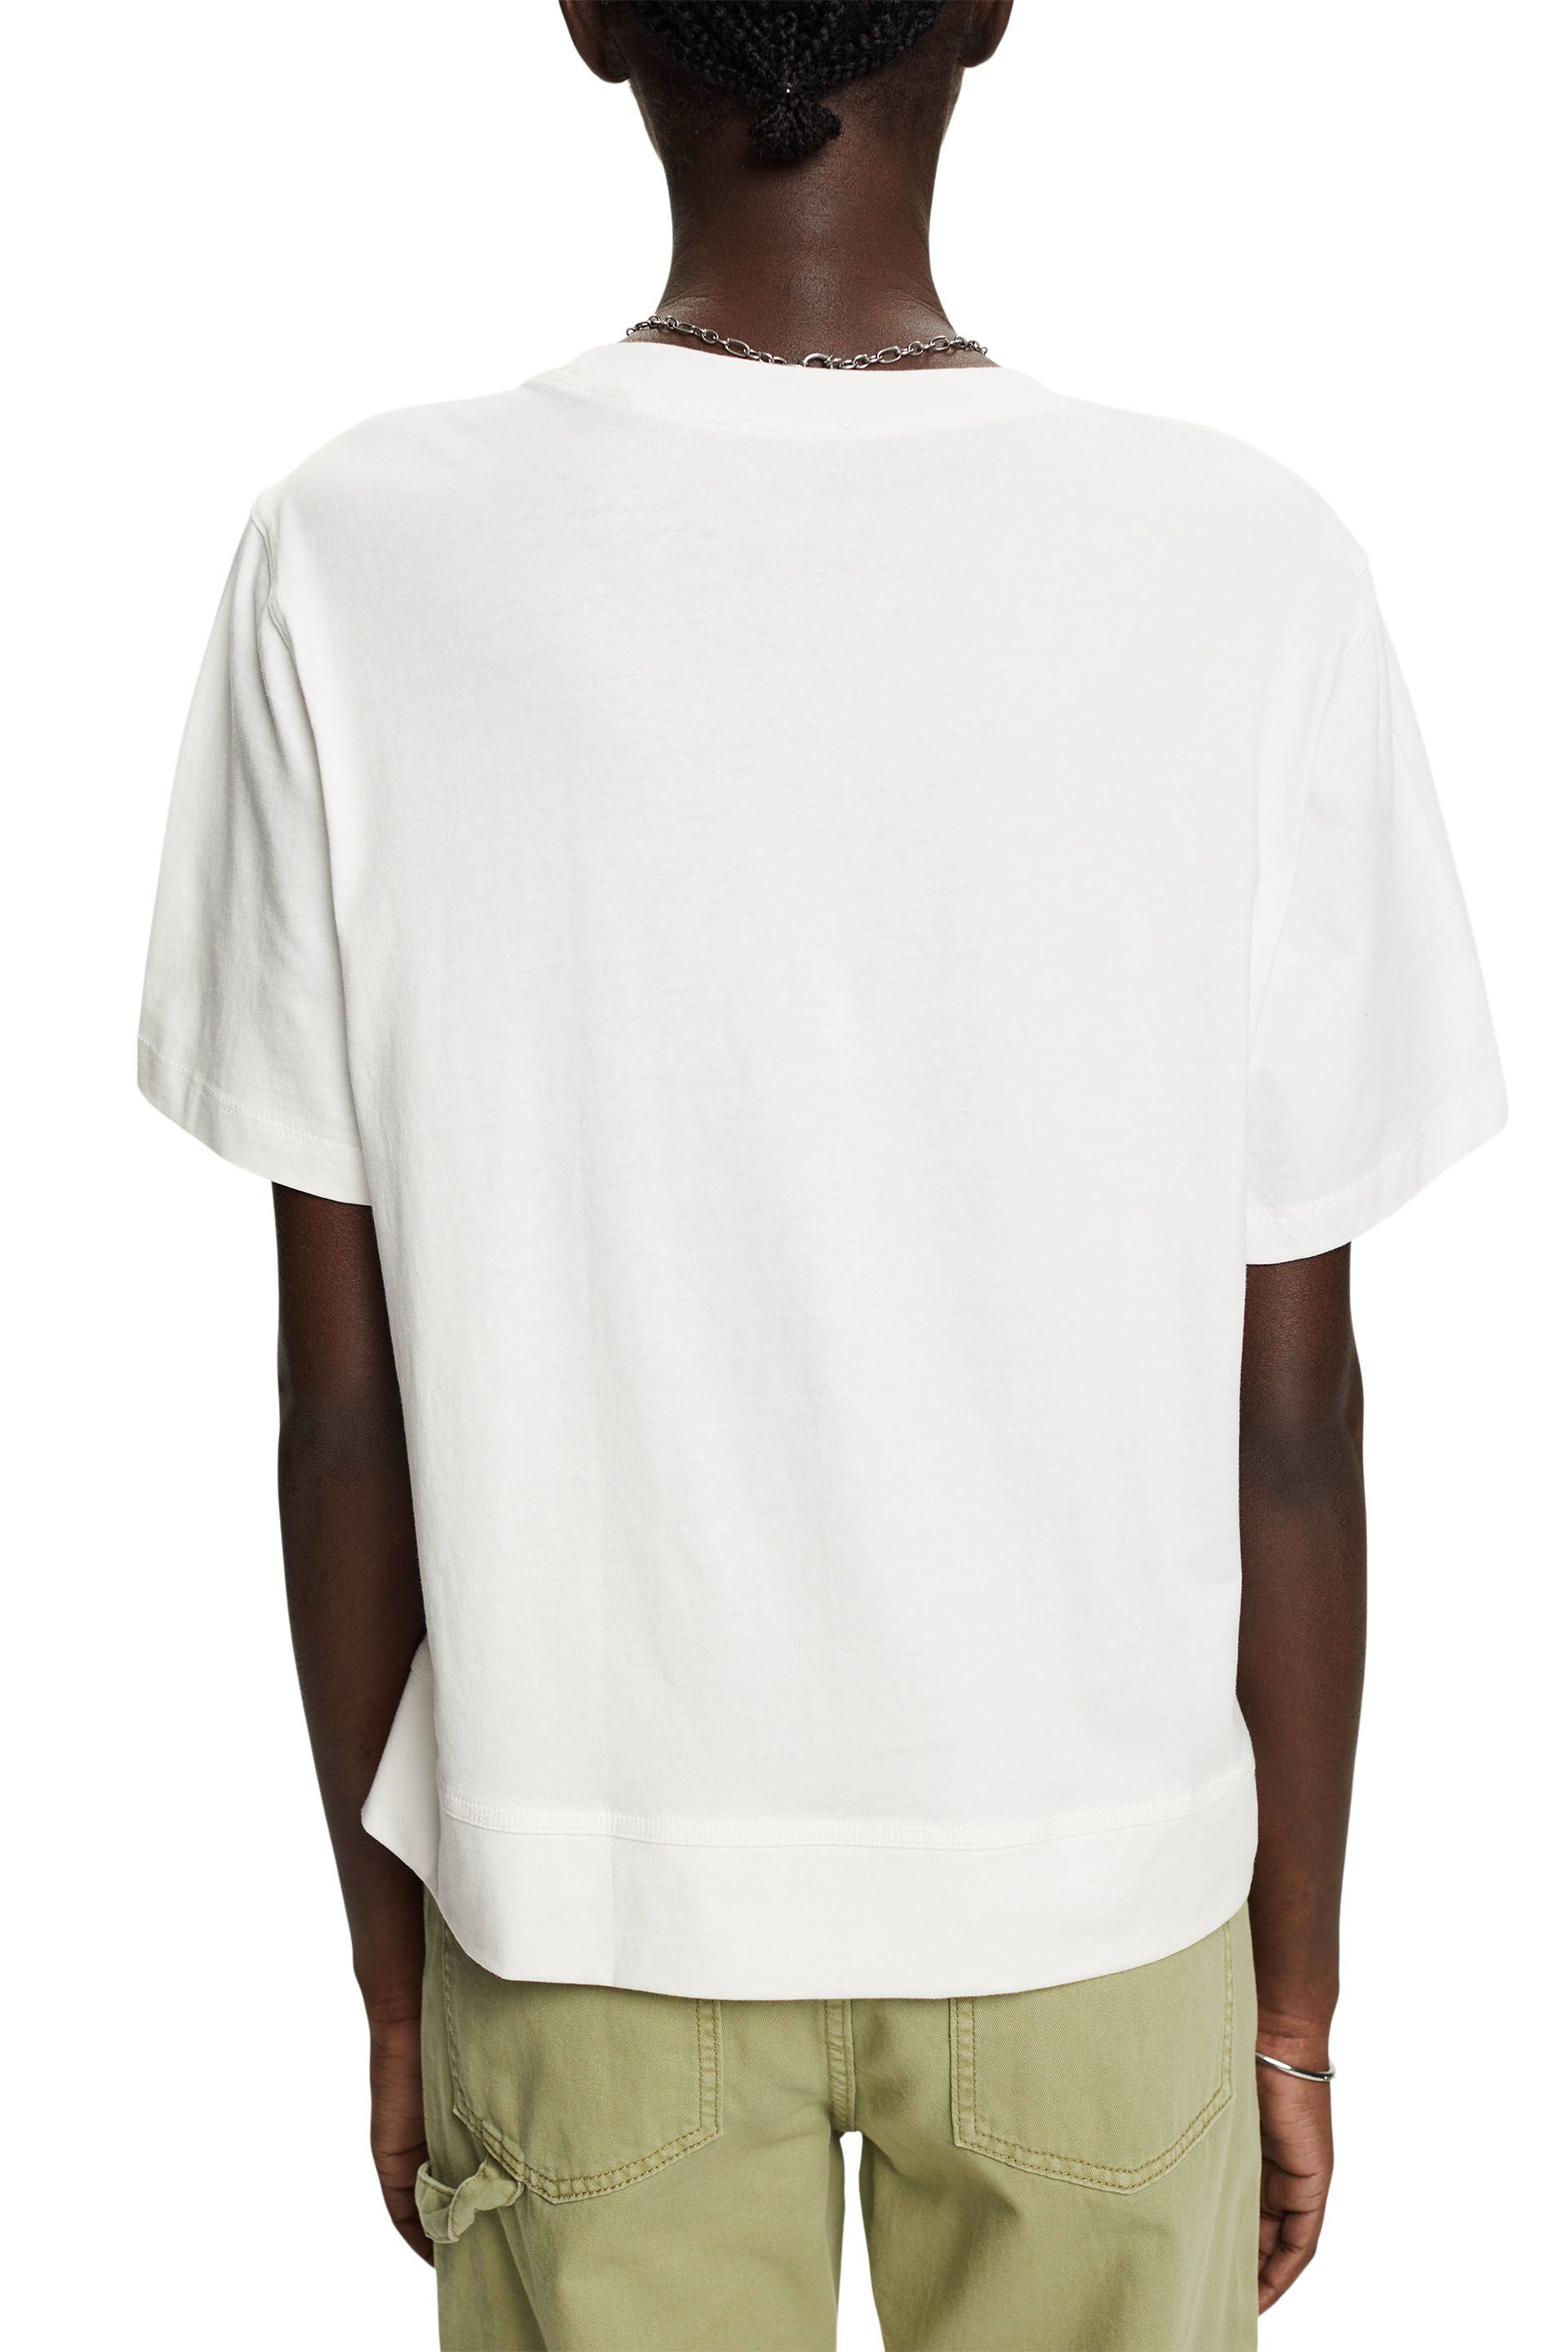 Esprit - T-shirt con stampa floreale, Bianco, large image number 3